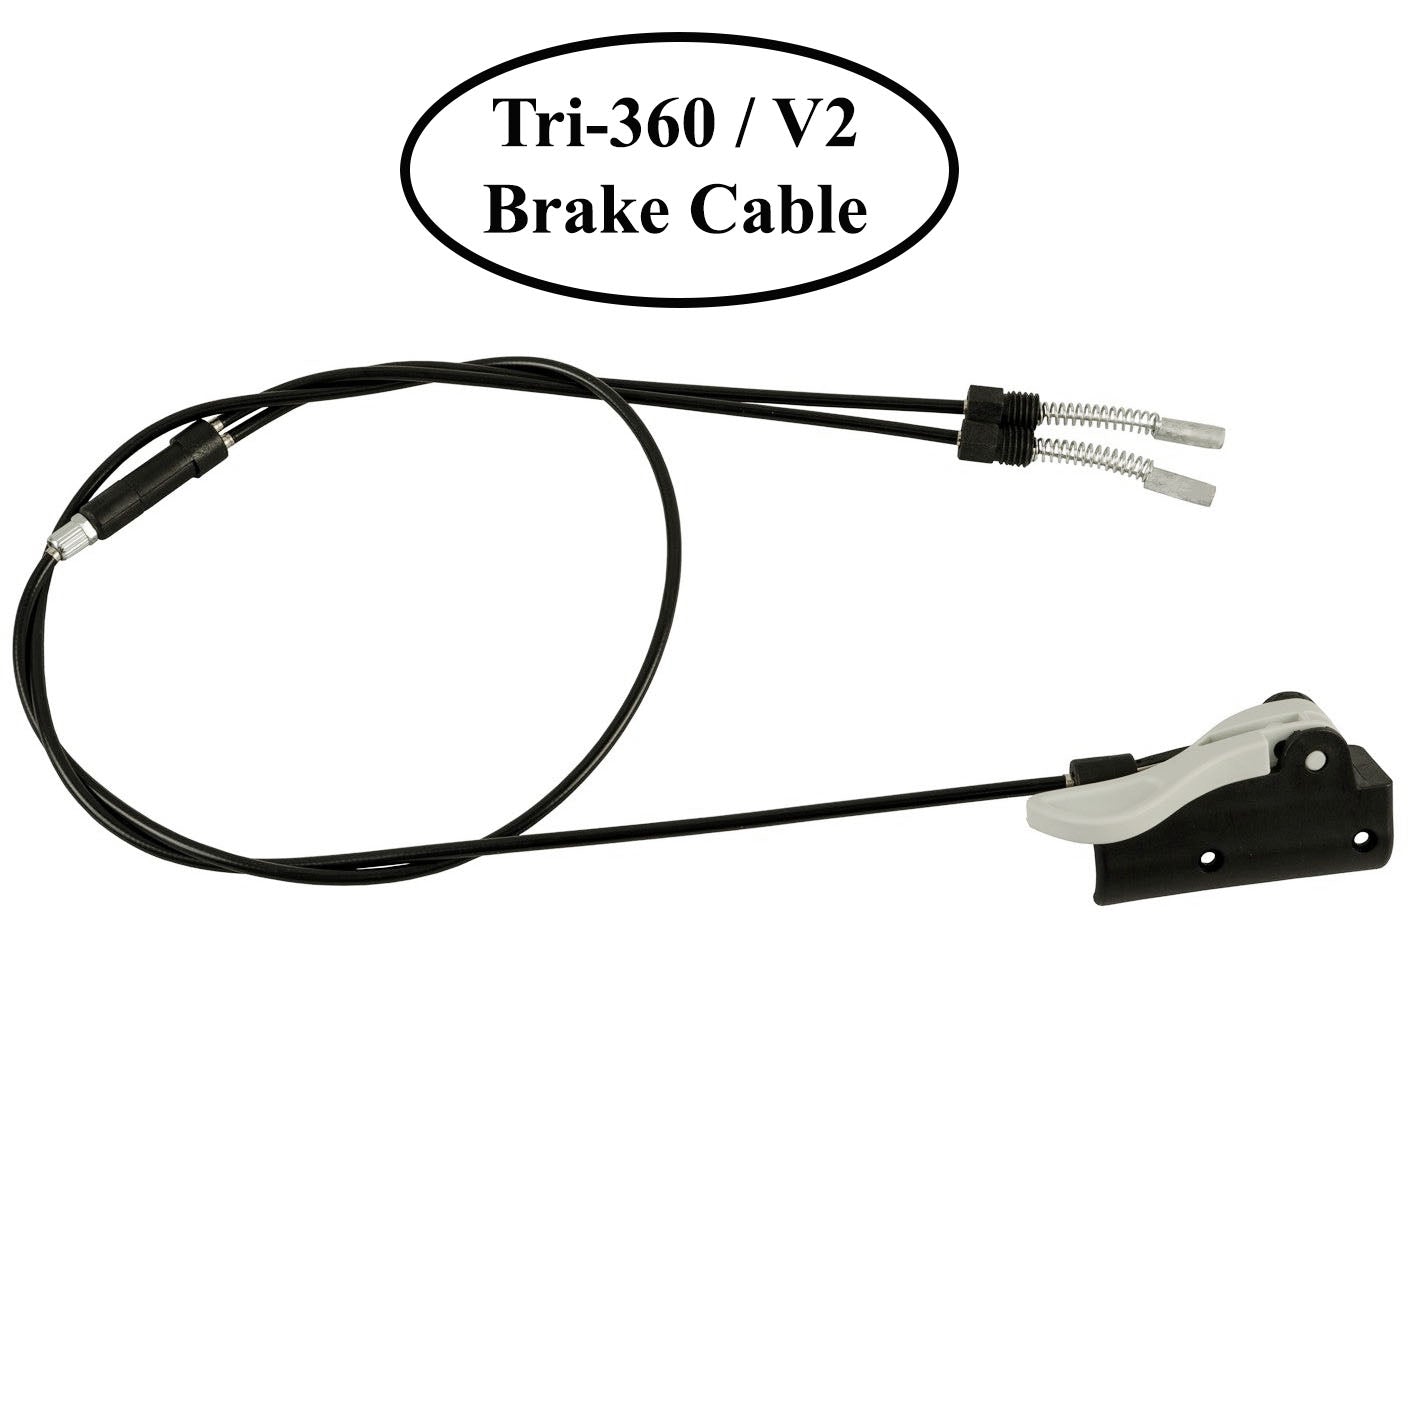 Axglo Tri-360 & Axglo V2 Brake Cable